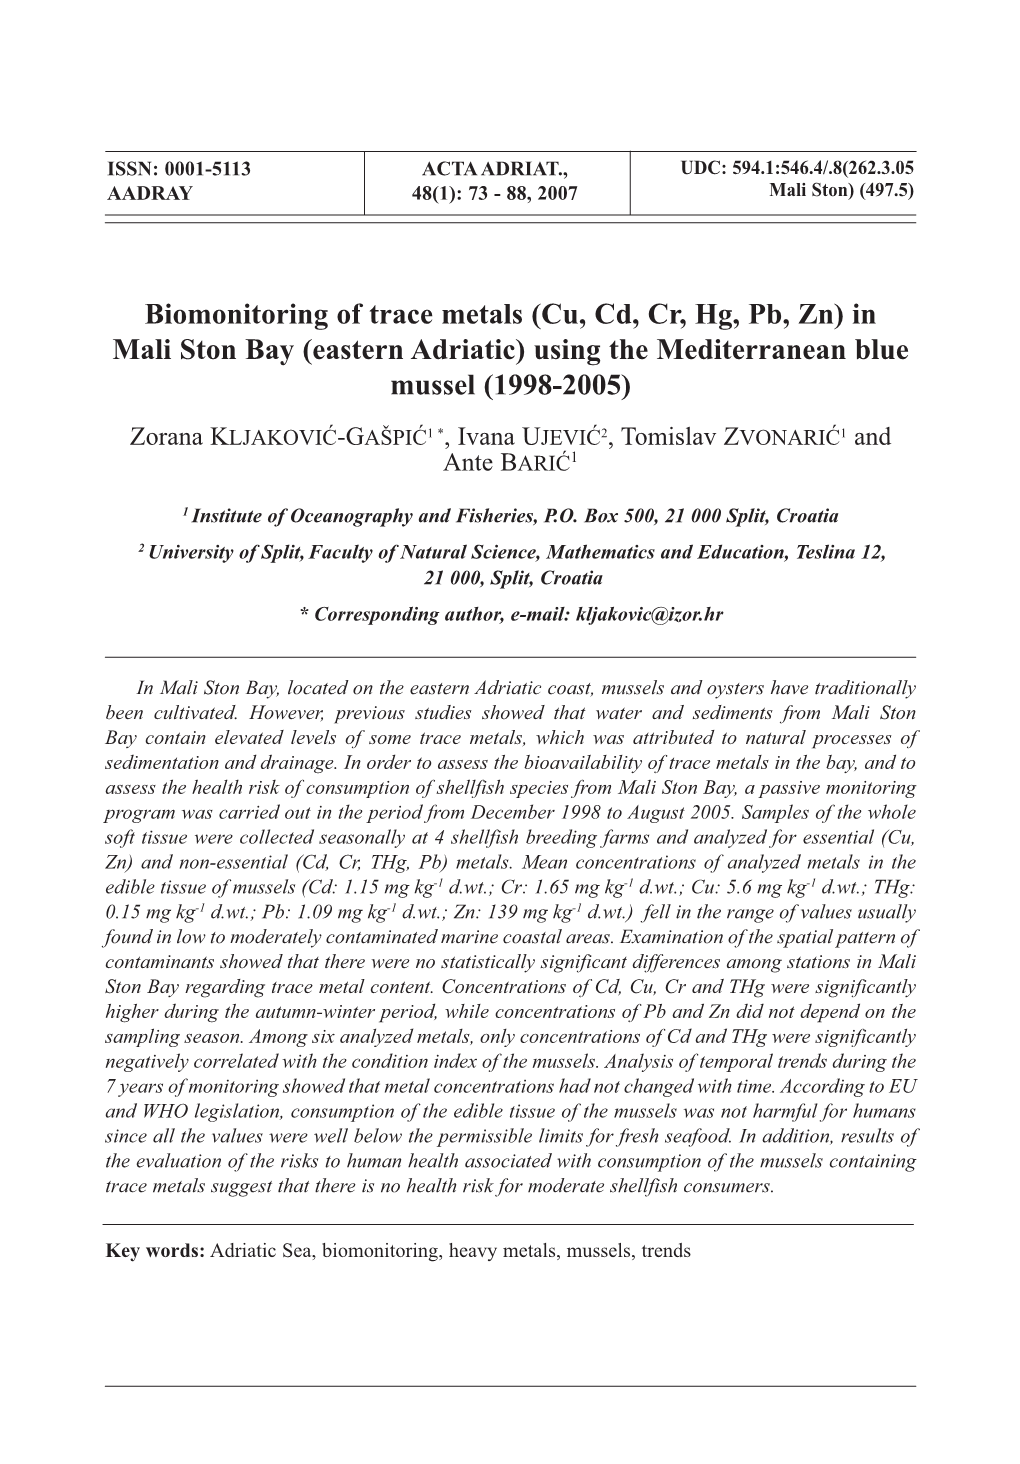 Biomonitoring of Trace Metals (Cu, Cd, Cr, Hg, Pb, Zn) in Mali Ston Bay (Eastern Adriatic) Using the Mediterranean Blue Mussel (1998-2005)